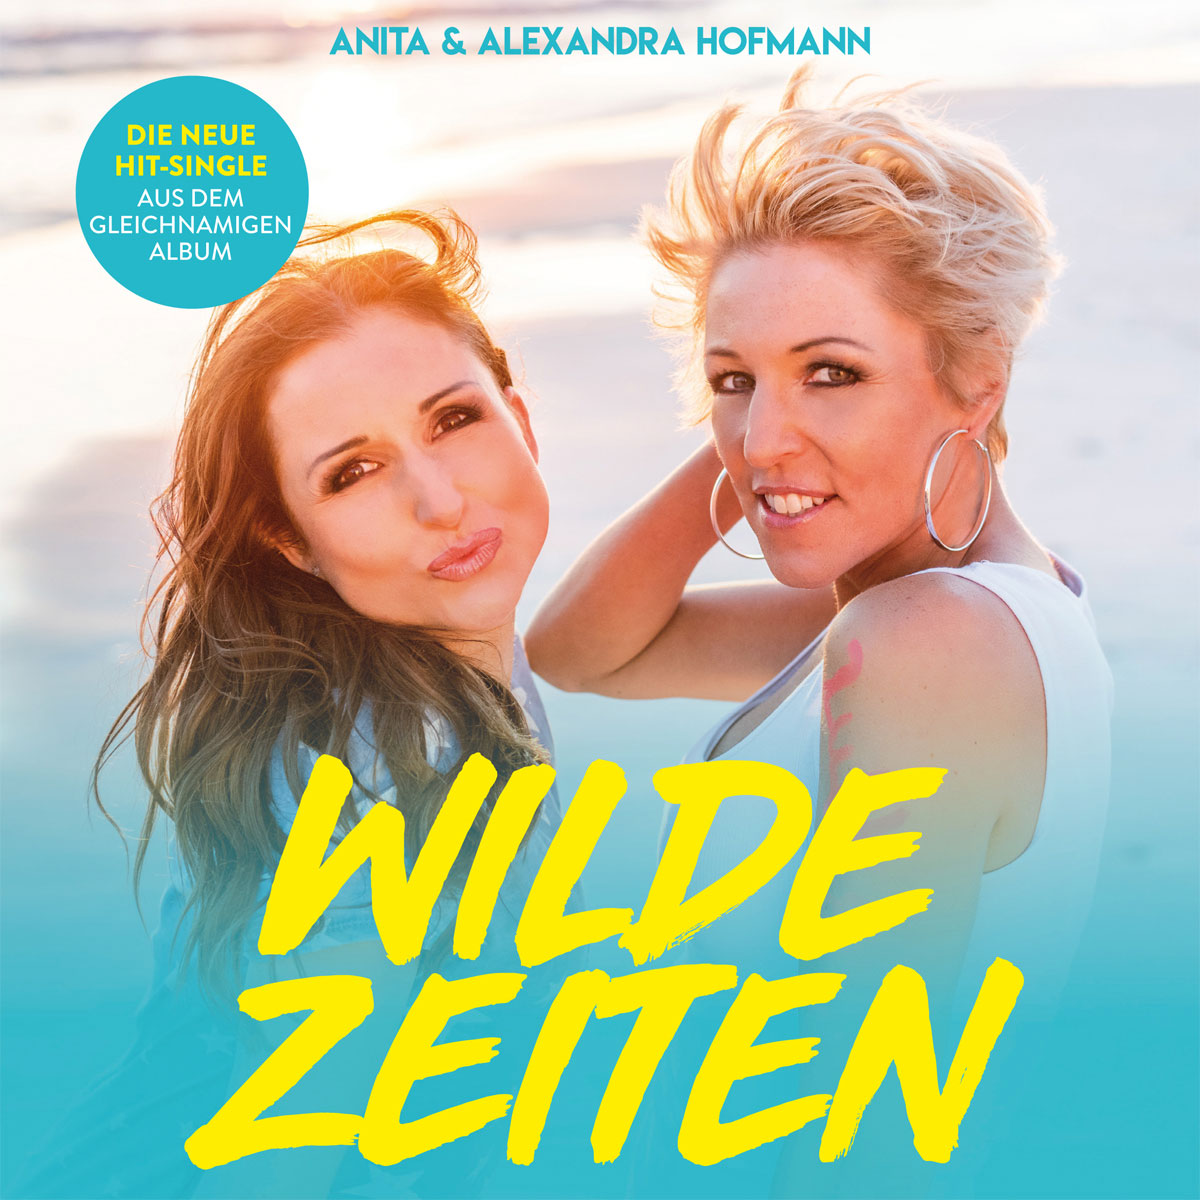 ANITA & ALEXANDRA HOFMANN – WILDE ZEITEN (SINGLE)